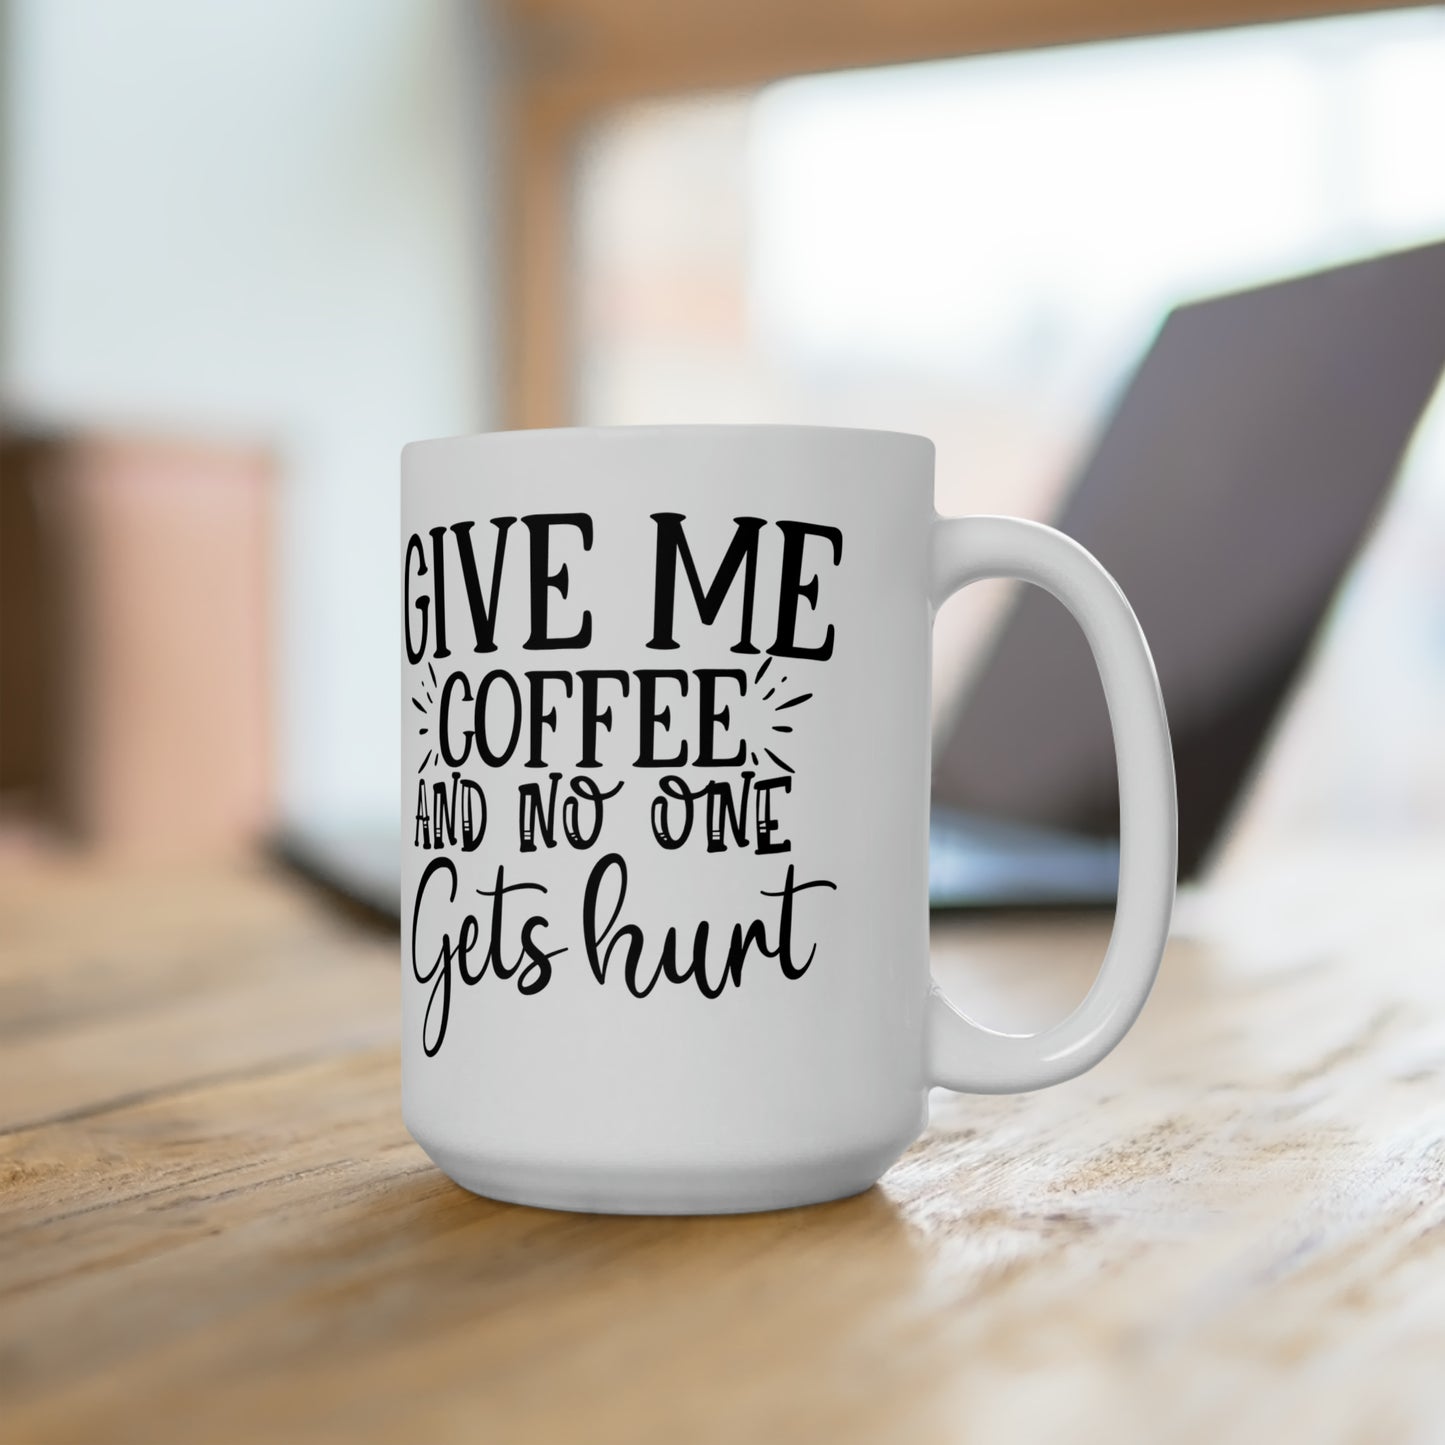 Funny Coffee Mug For Give Me Coffee Lovers Gift